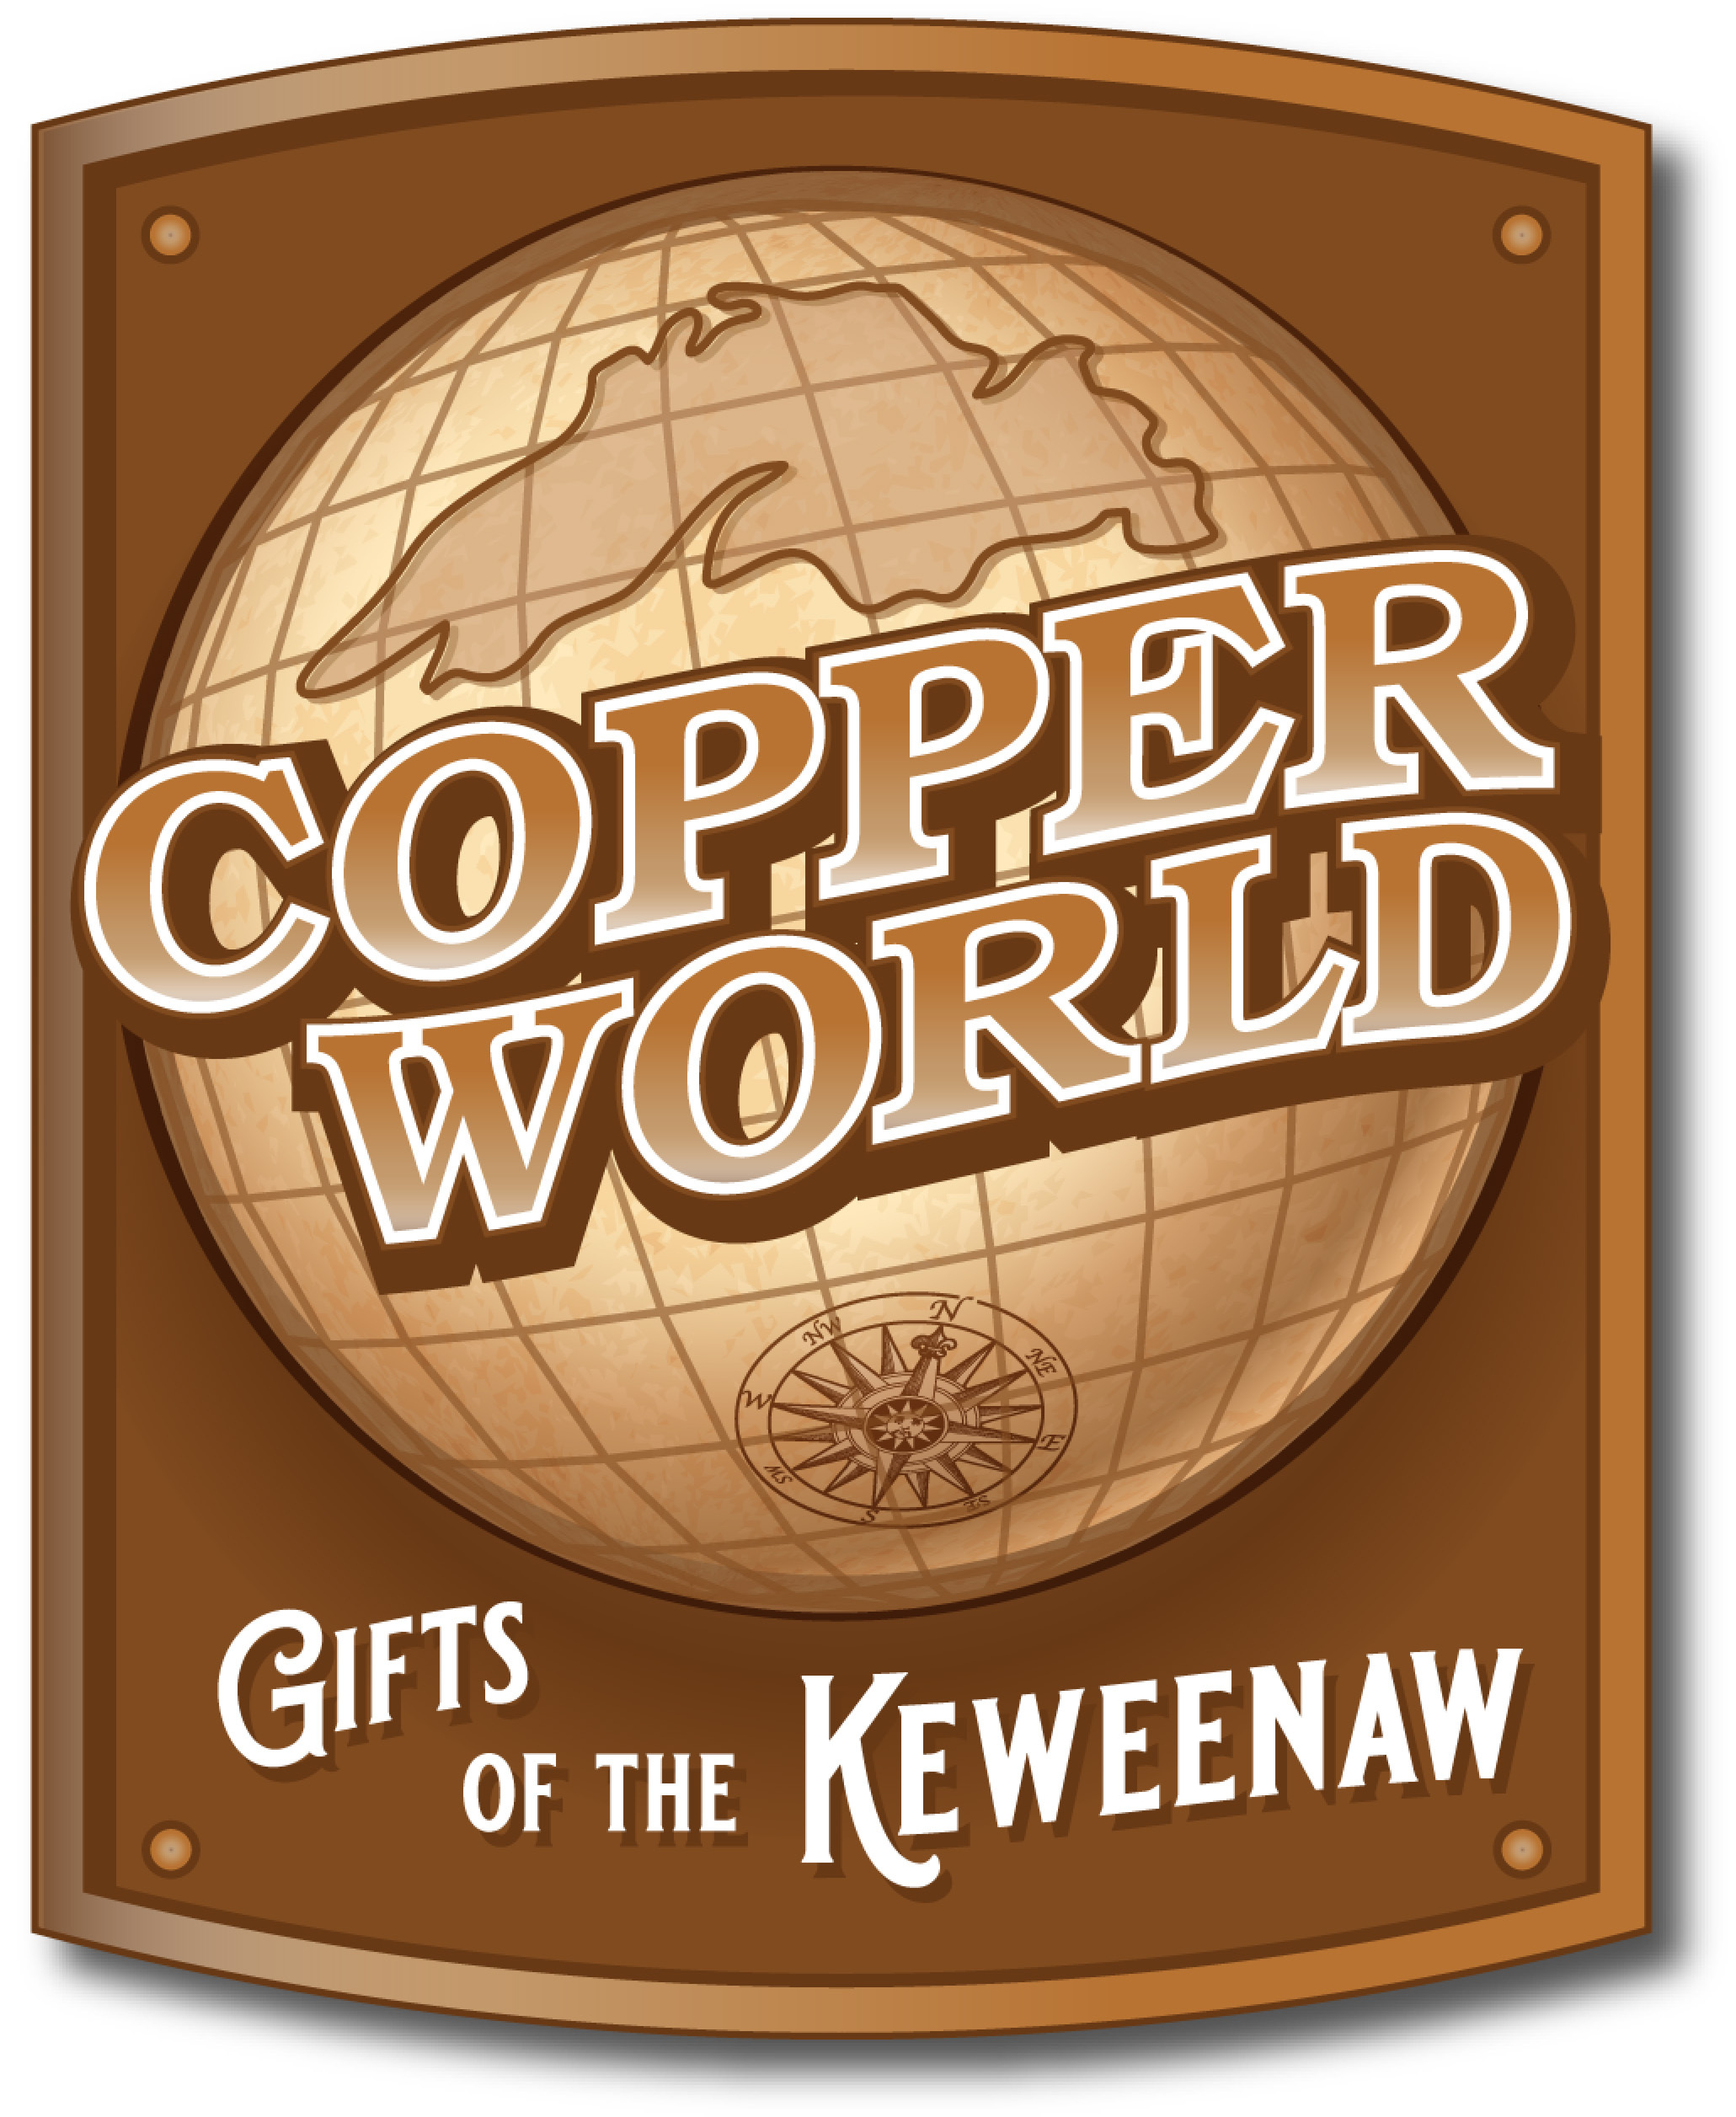 Official CopperDog Merchandise